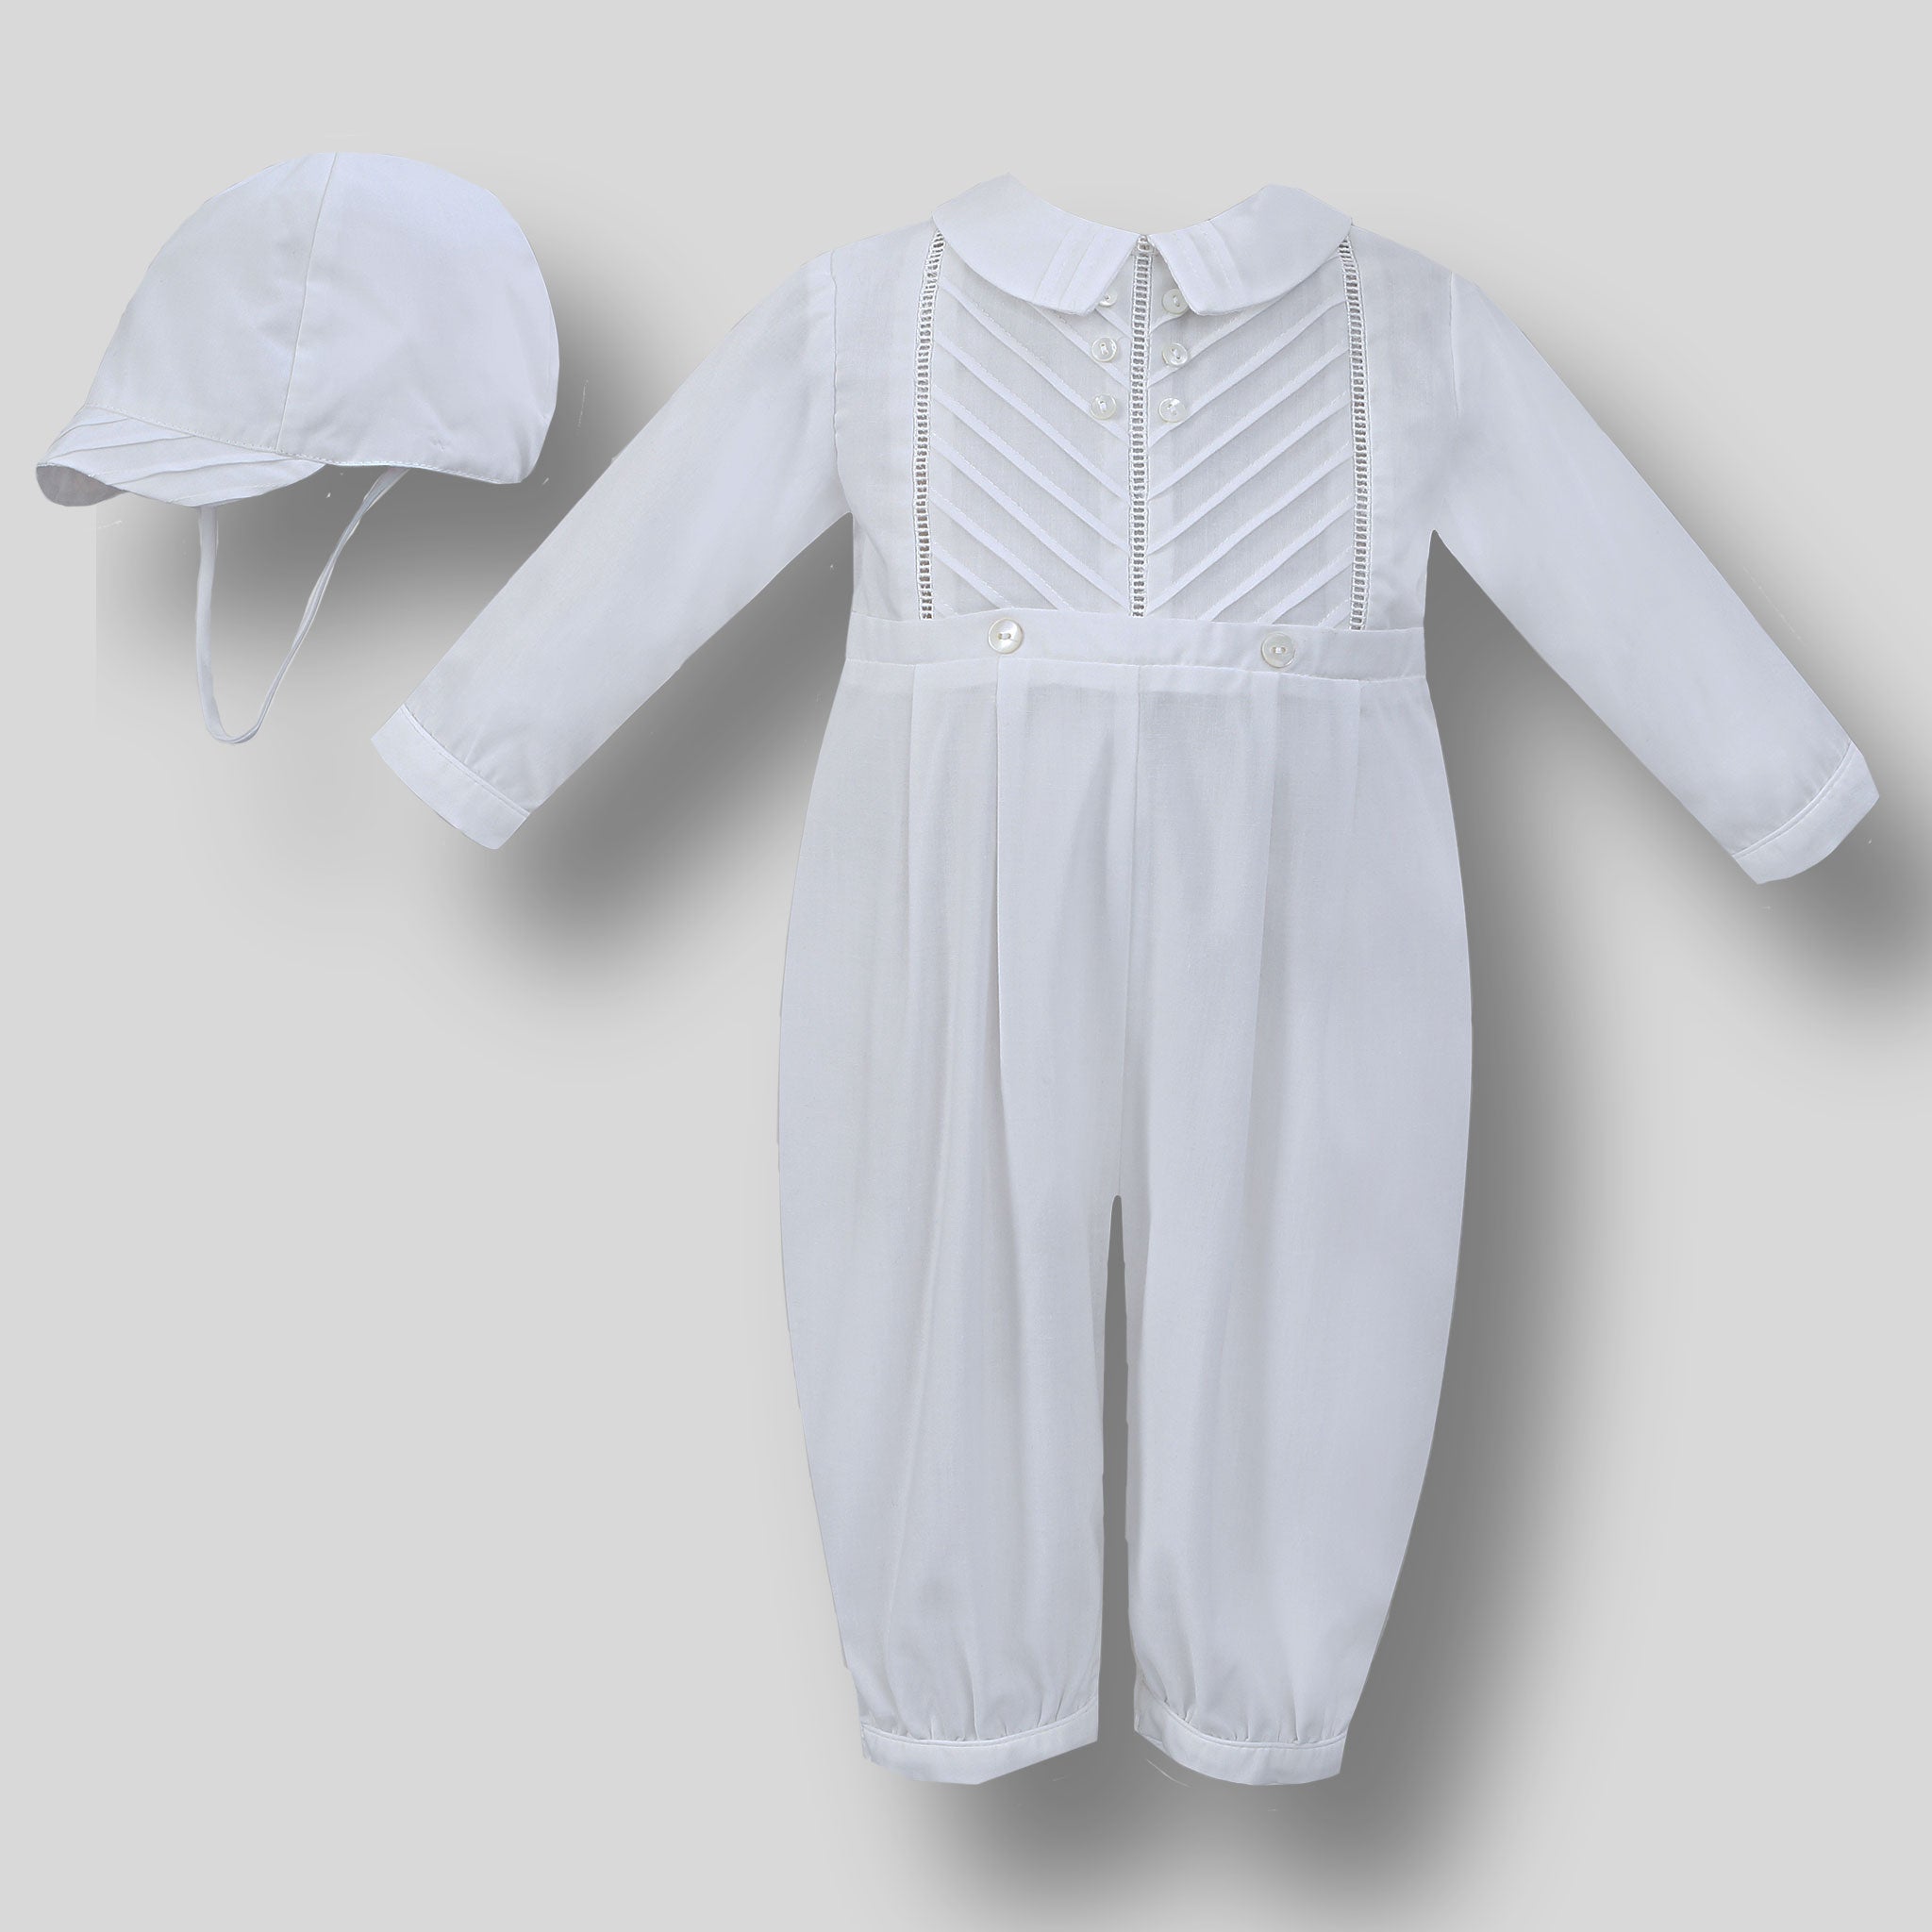 Baby Boy White Romper with matching cap - Christening - Sarah Louise C3001